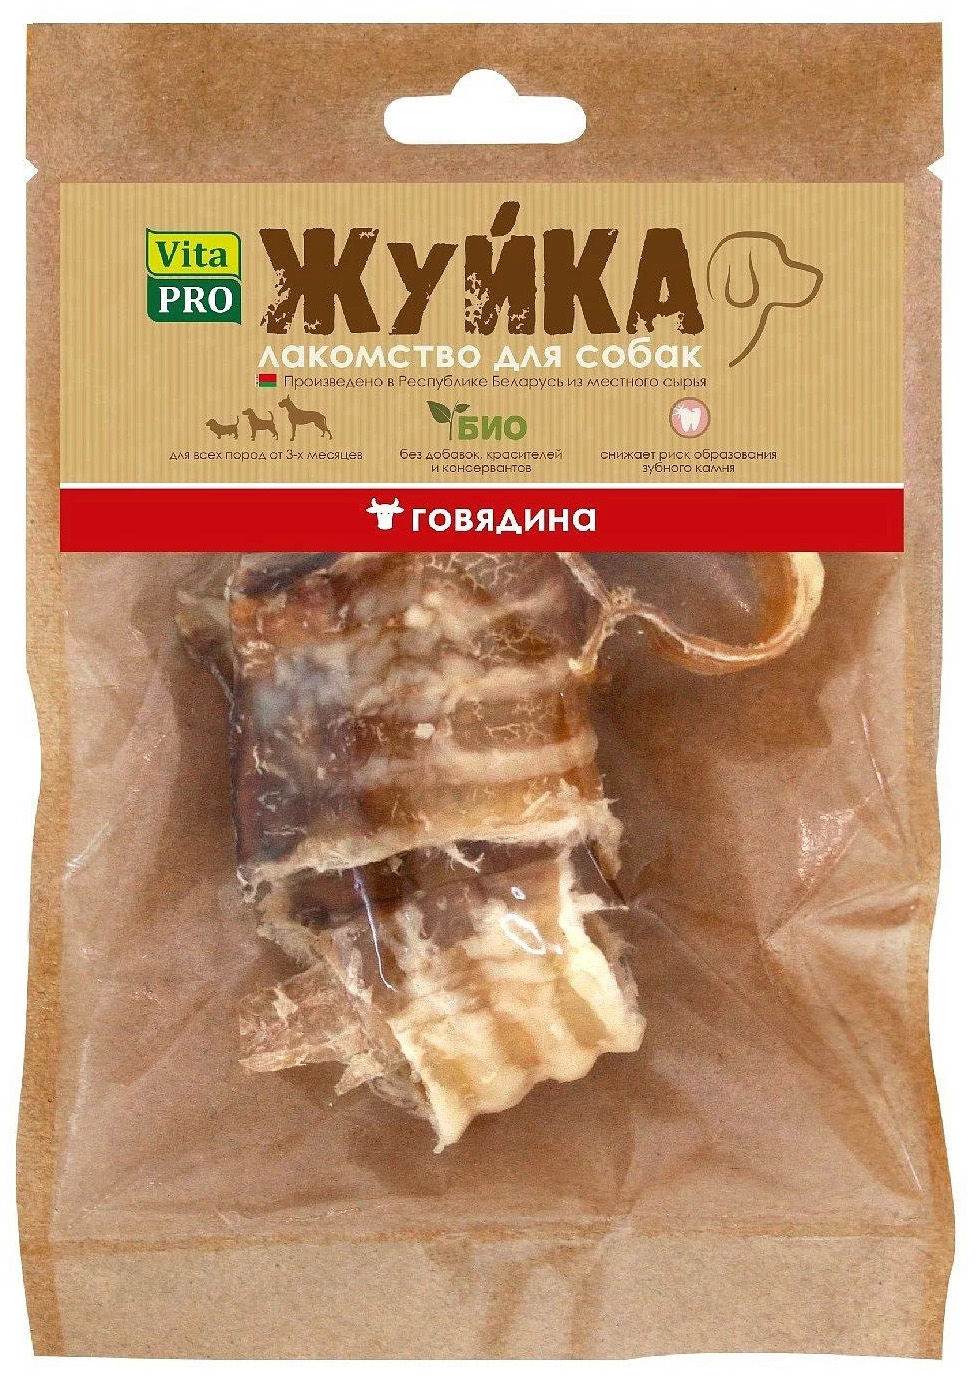 фото Лакомство для собак vitapro жуйка, трахея говяжья, 35г